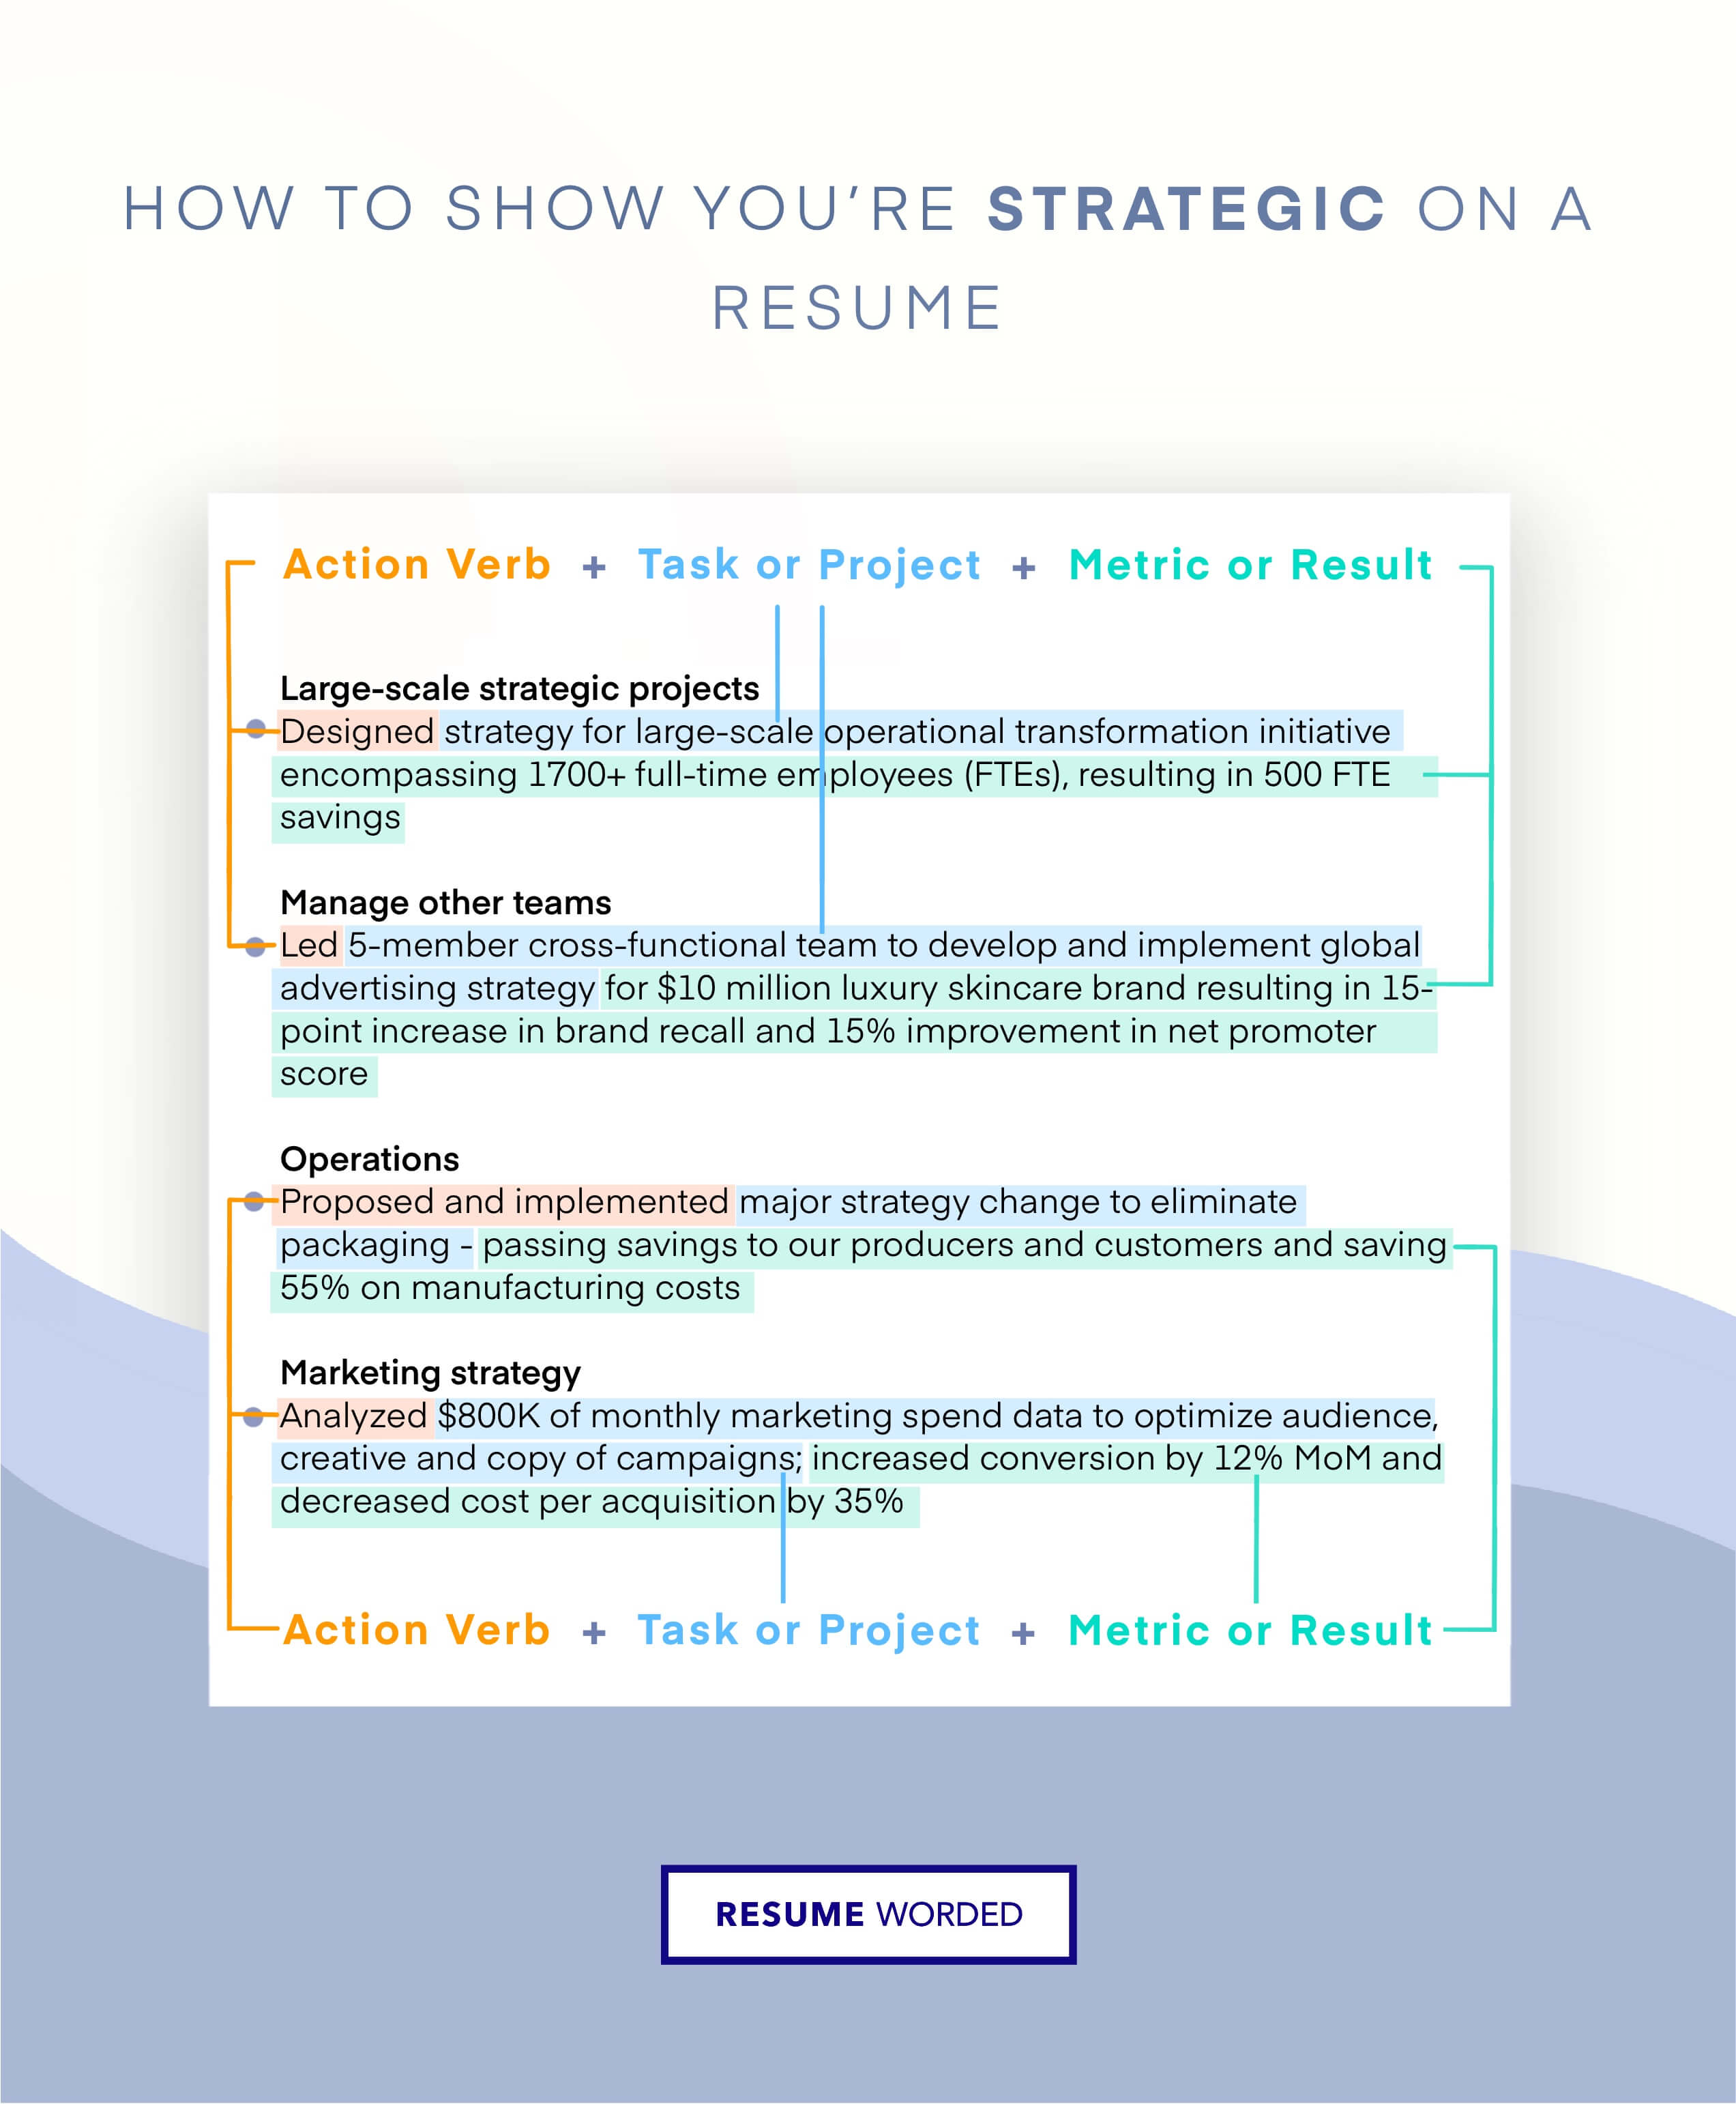 Showcase strategic planning skills - Business Development Associate CV